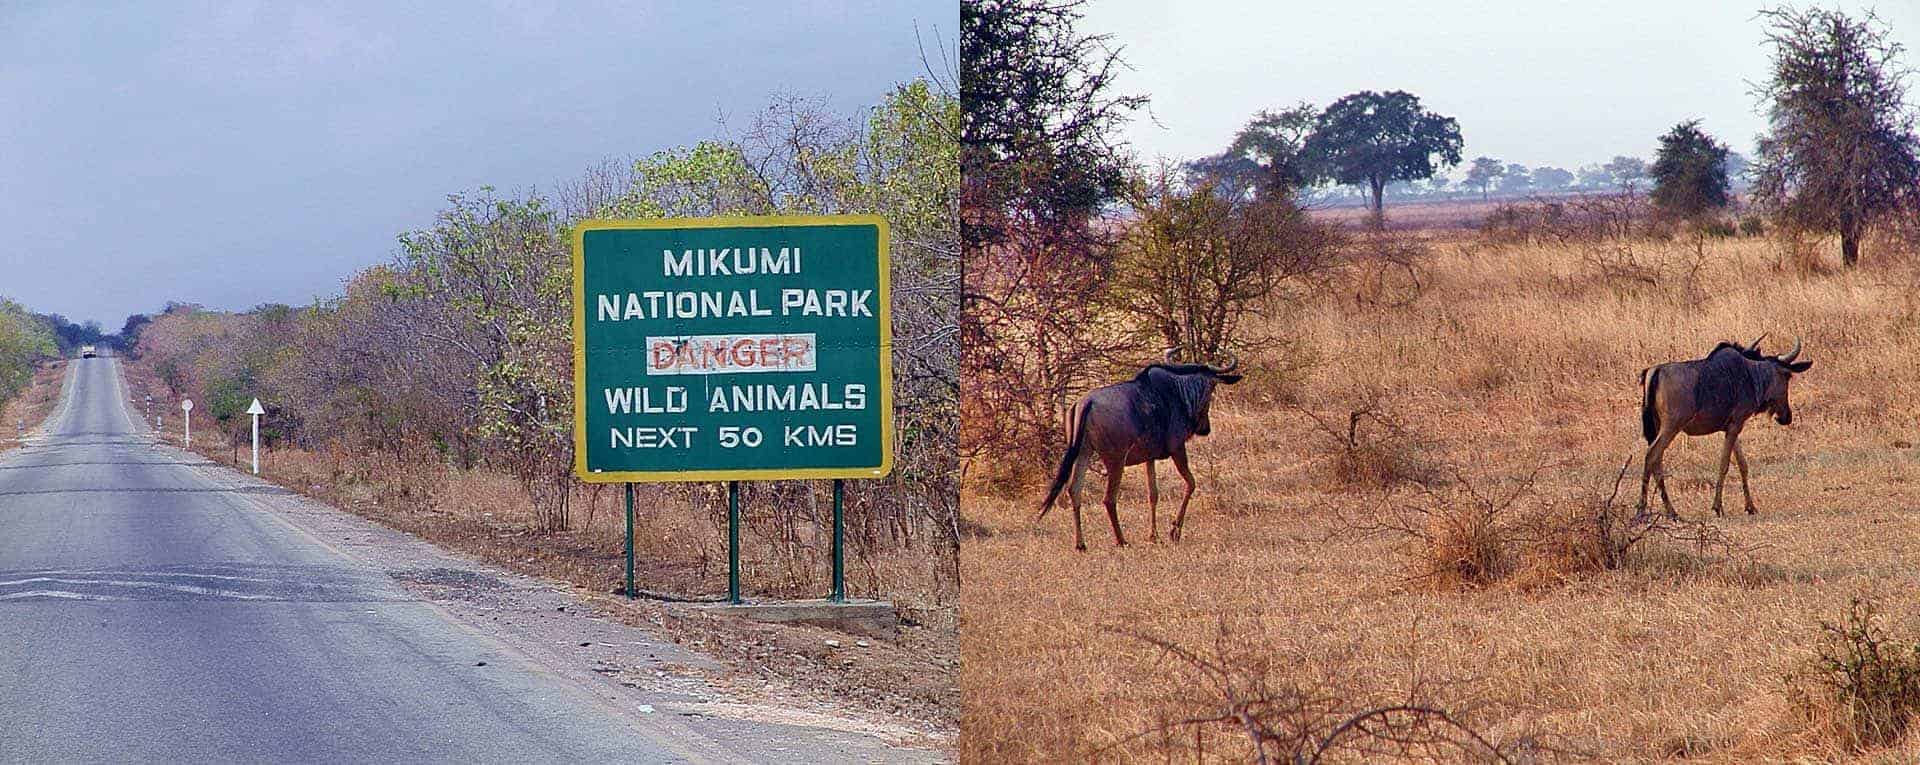 mikumi safari tanzania